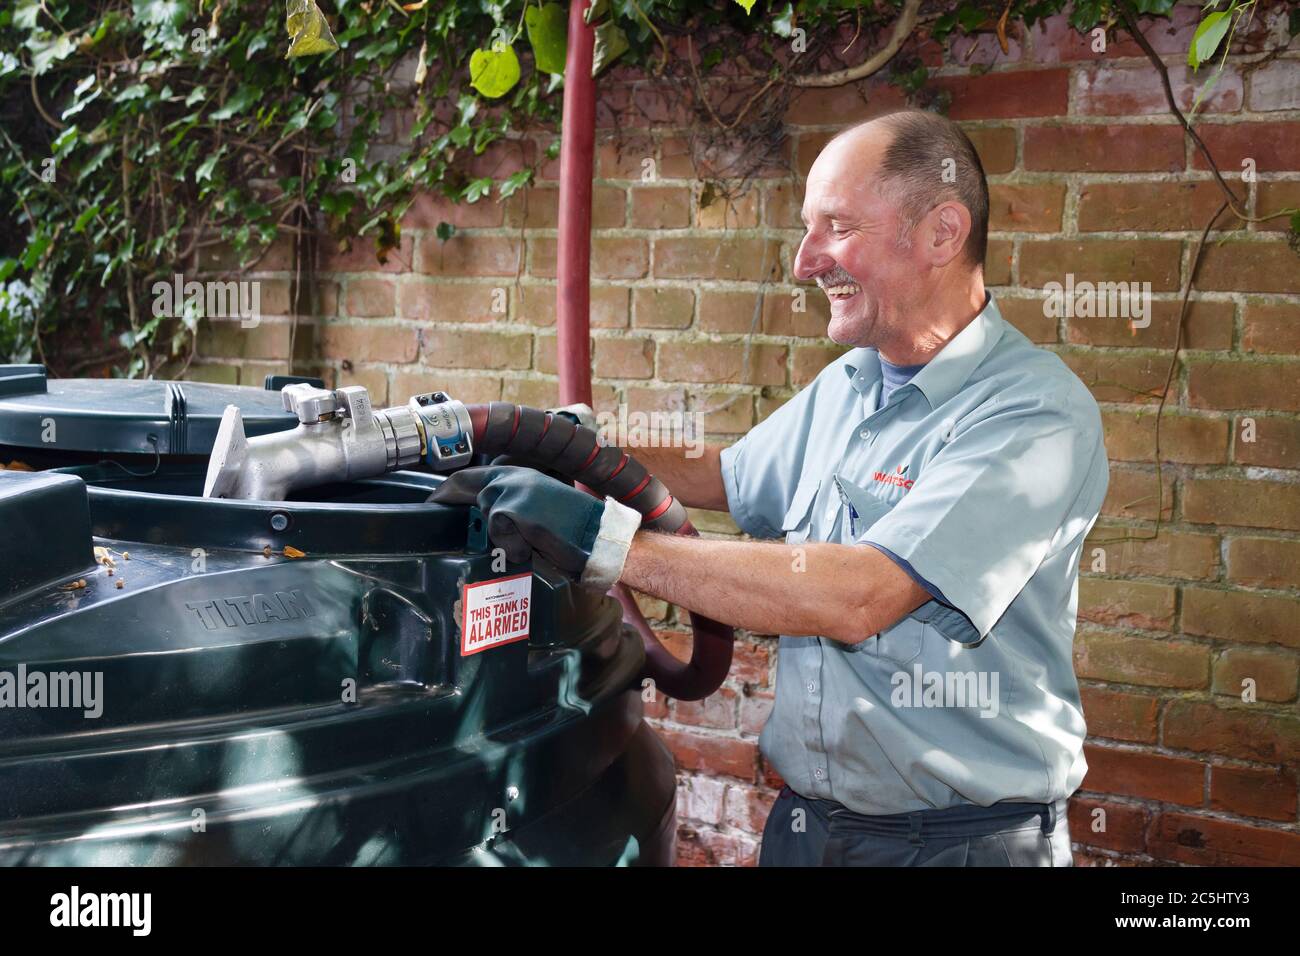 BUCKINGHAM, UK - September 13, 2014. Man filling a bunded oil tank with domestic heating oil (kerosene) at a home in rural England, UK Stock Photo